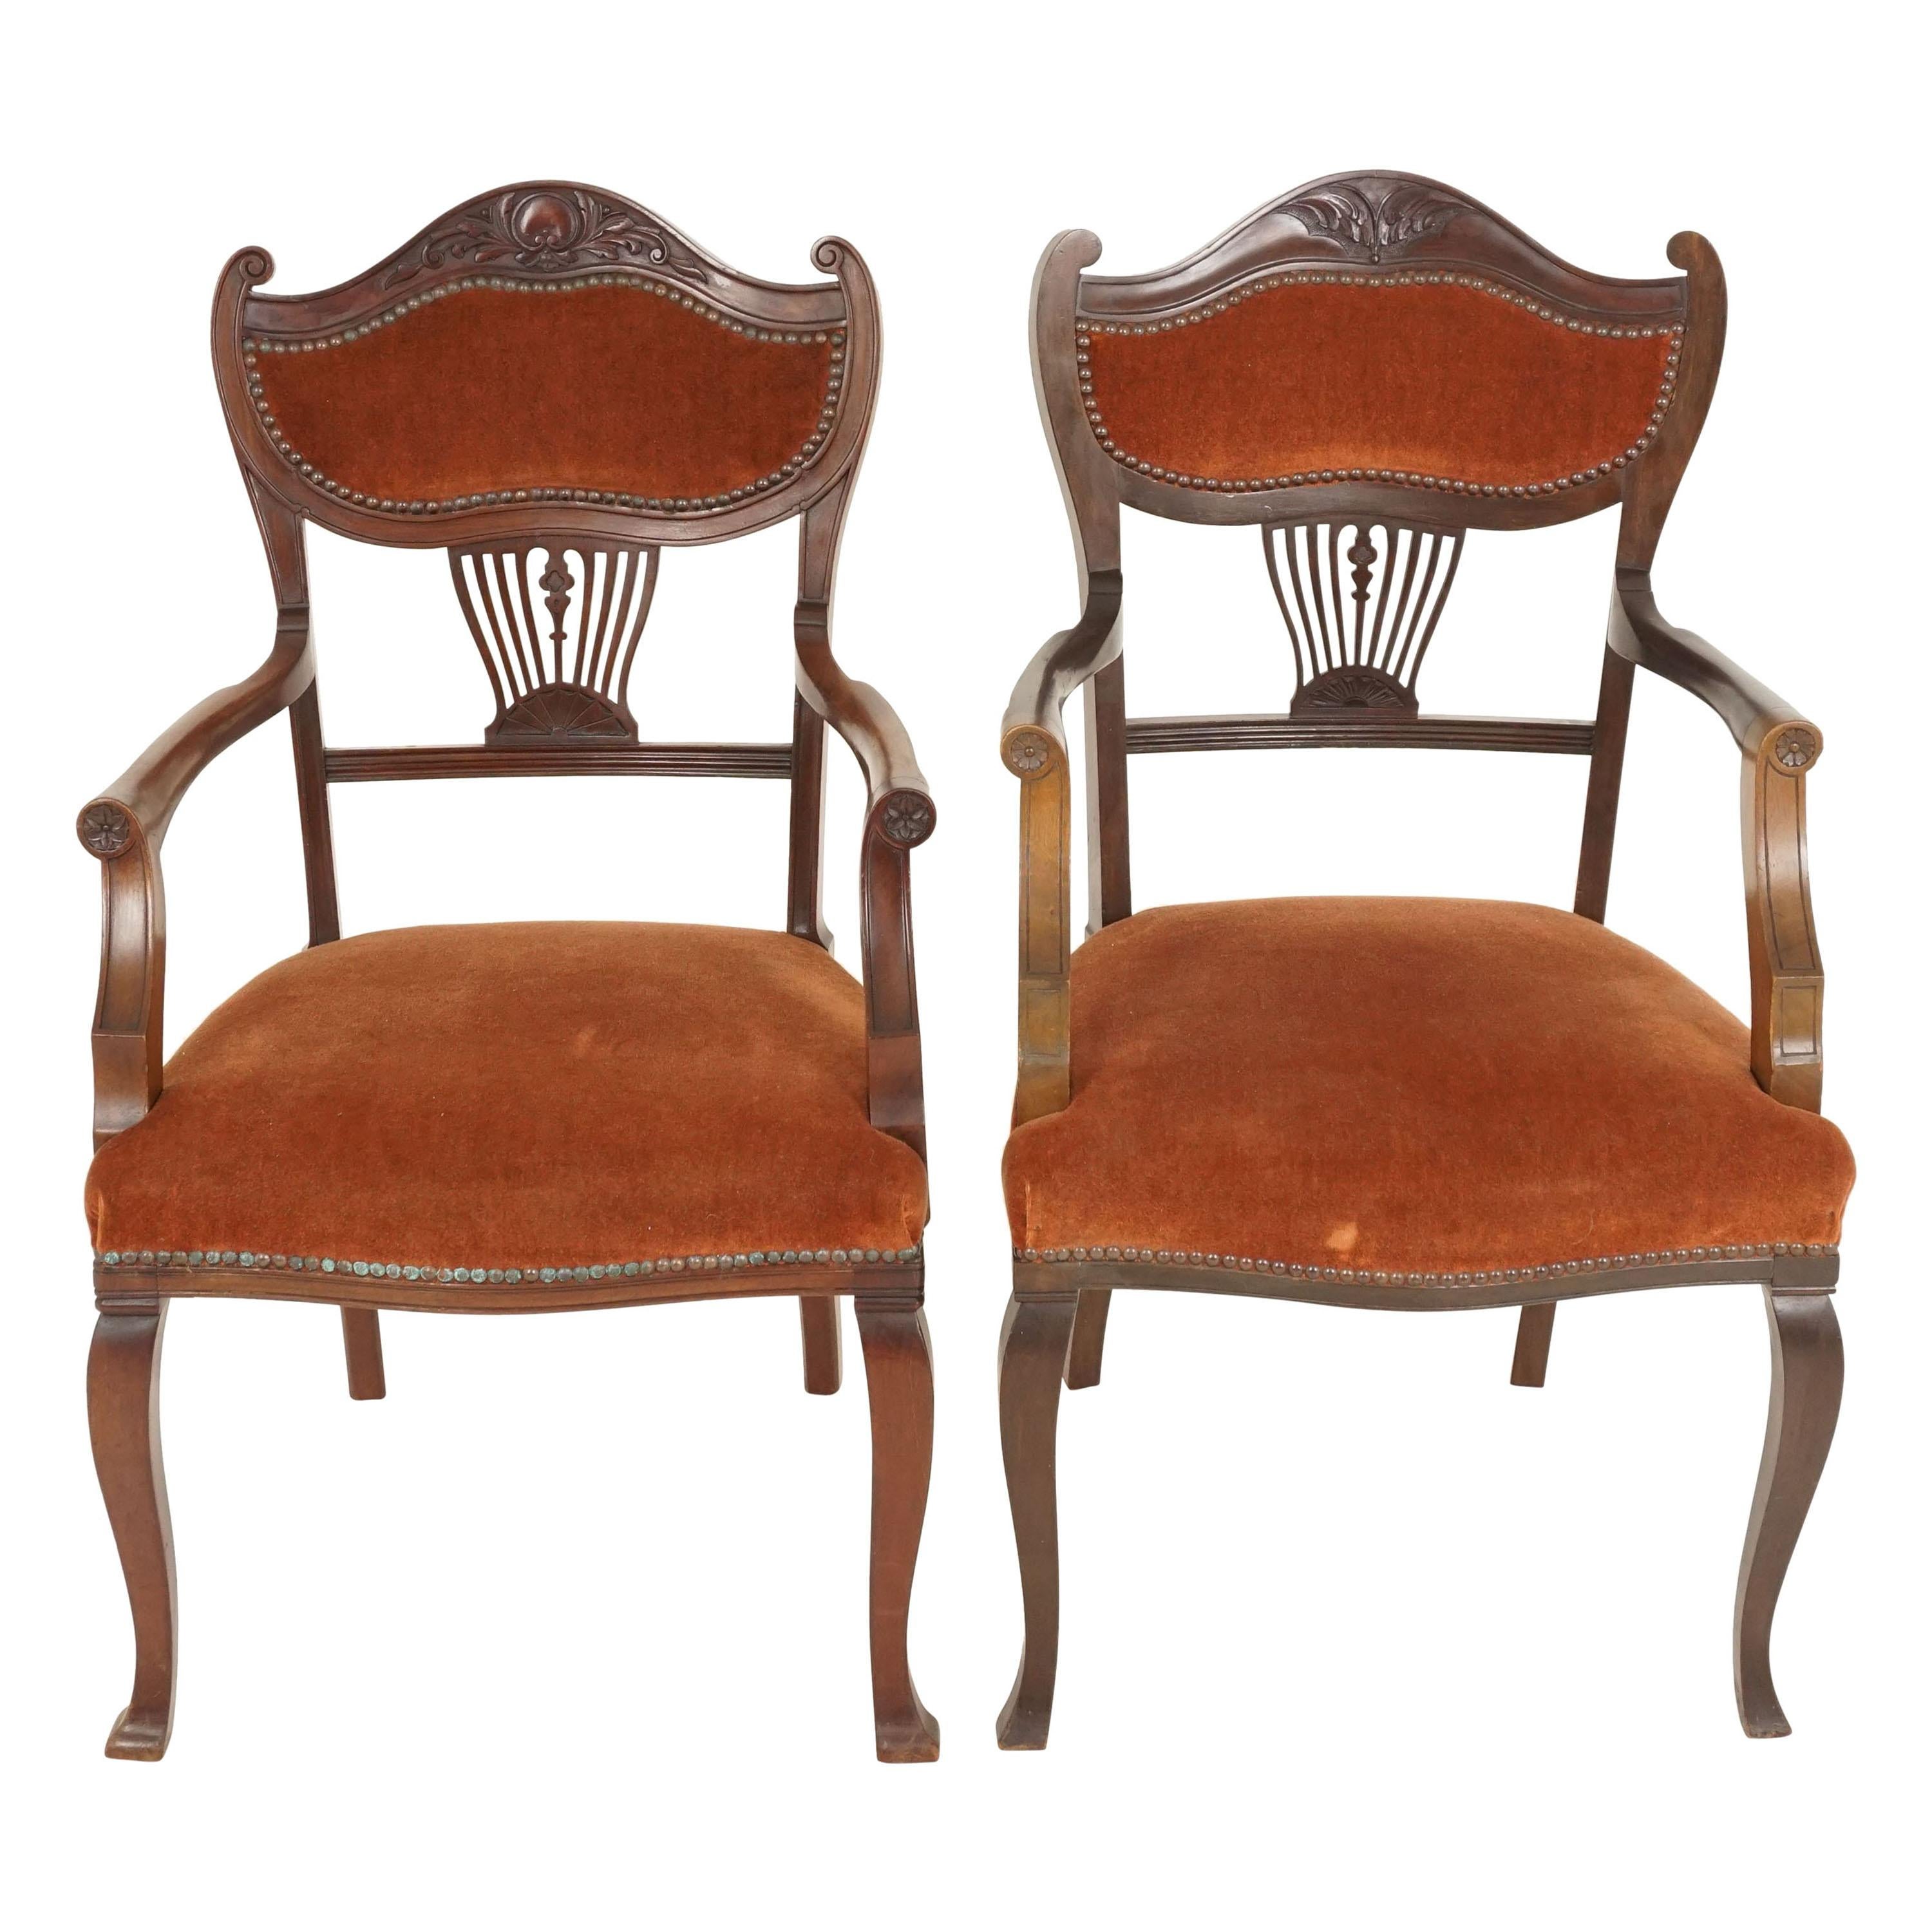 Antique Walnut Arm Chairs, Edwardian, Art Nouveau, Upholstered Seat, B2344